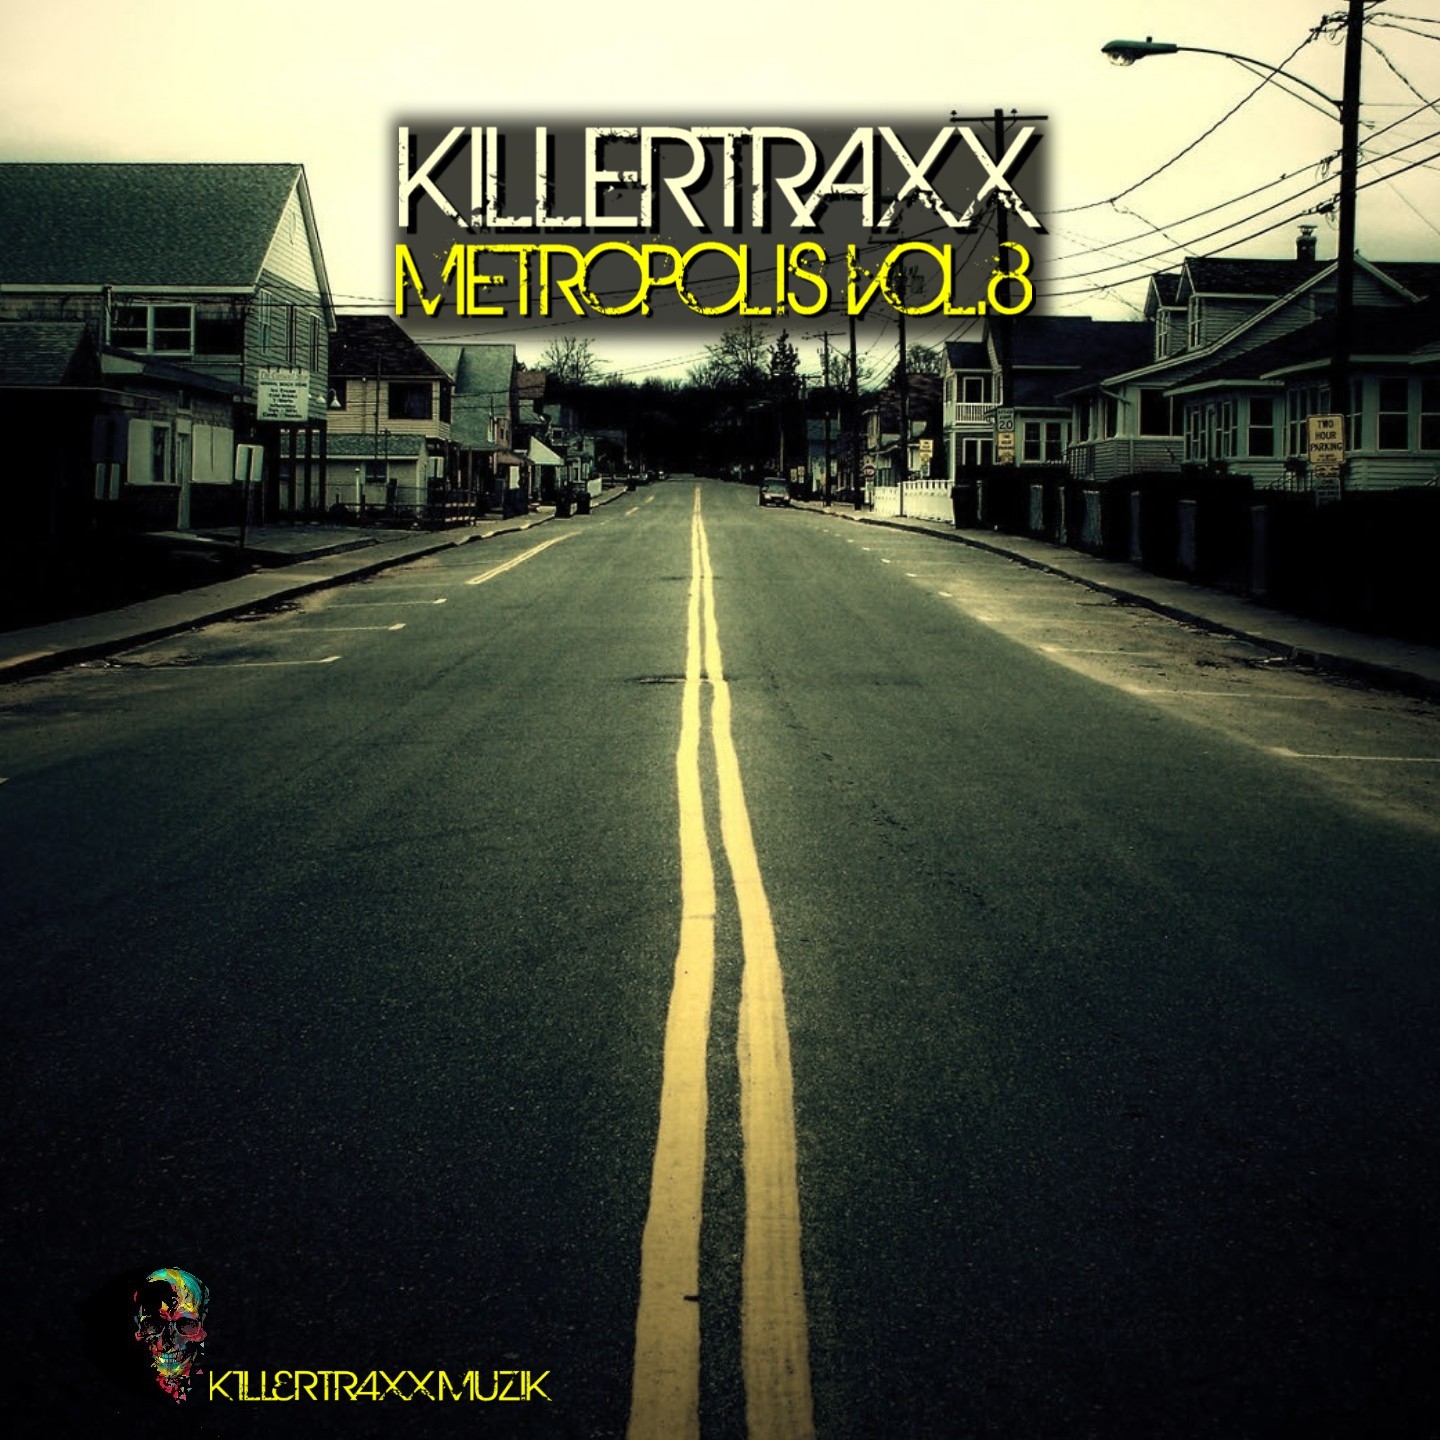 Killertraxx Metropolis, Vol. 8